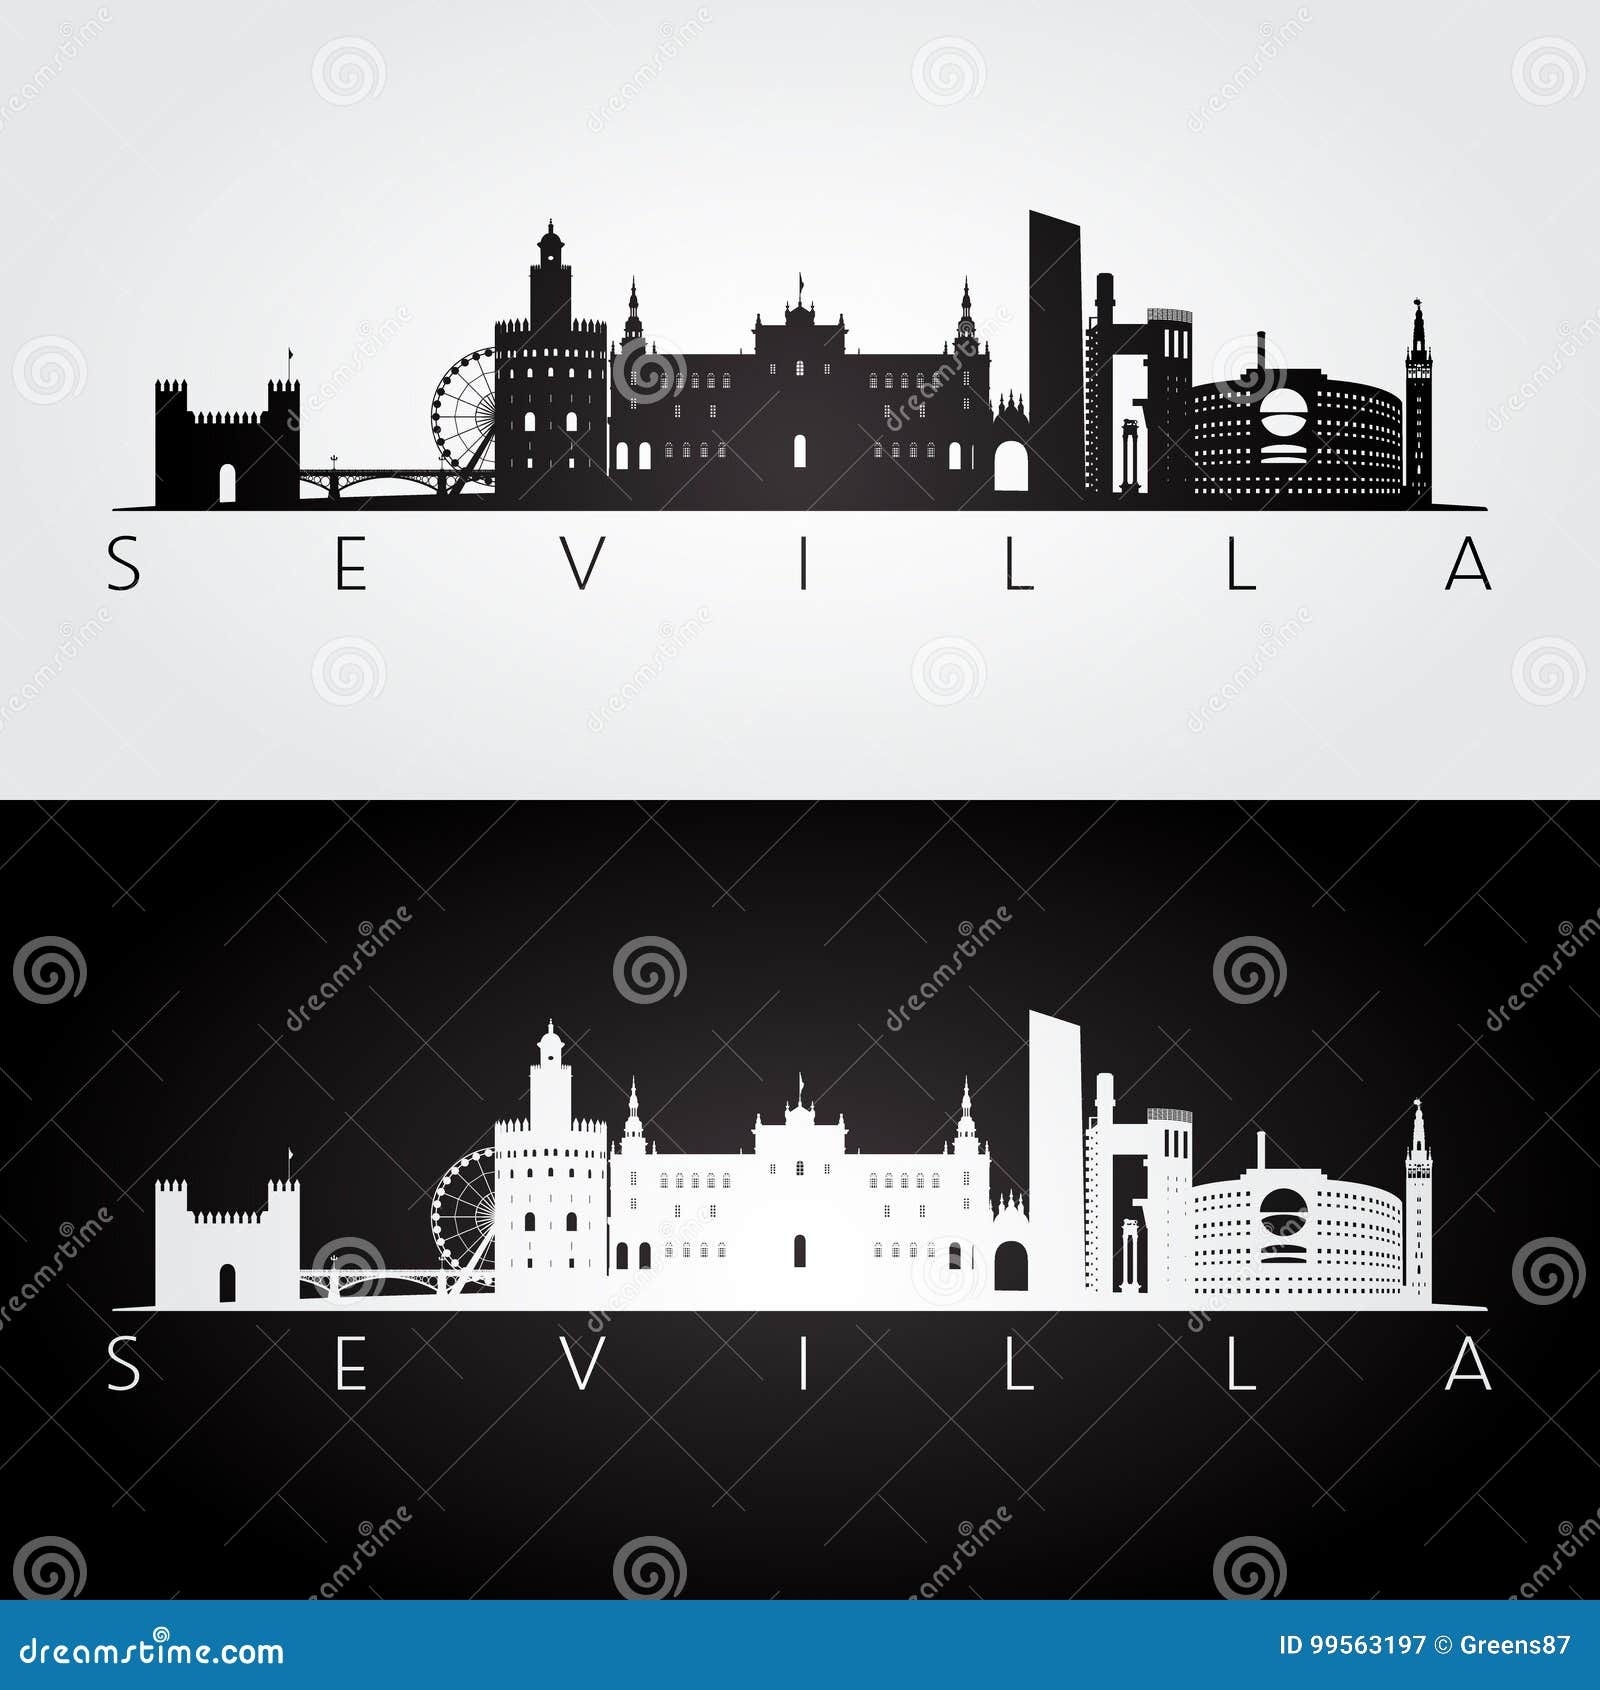 sevilla skyline and landmarks silhouette